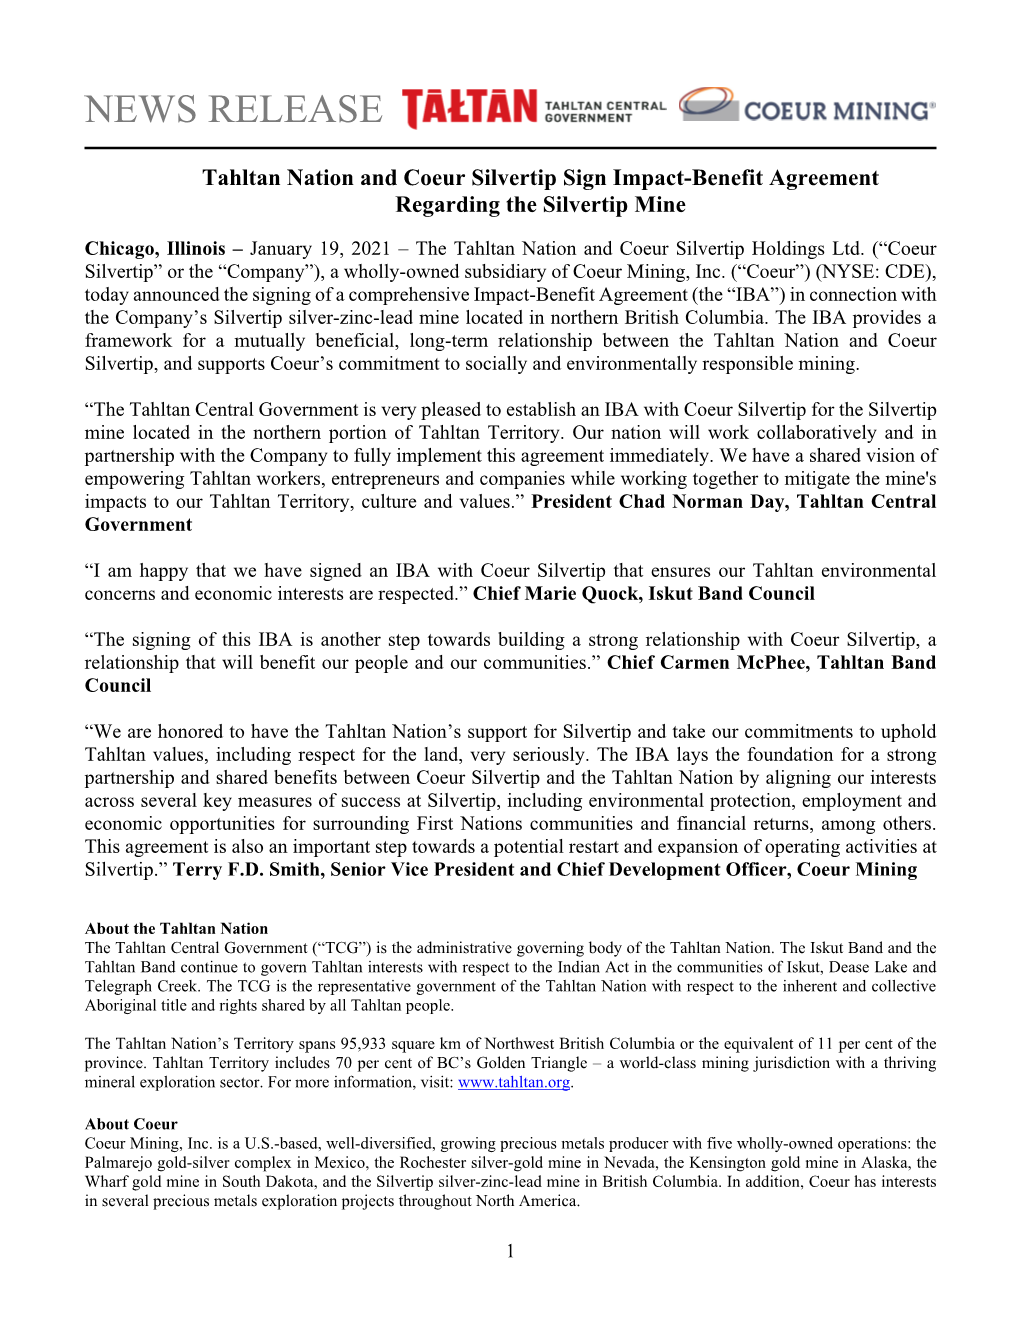 2021-01-19 Tahltan Silvertip IBA Announcement